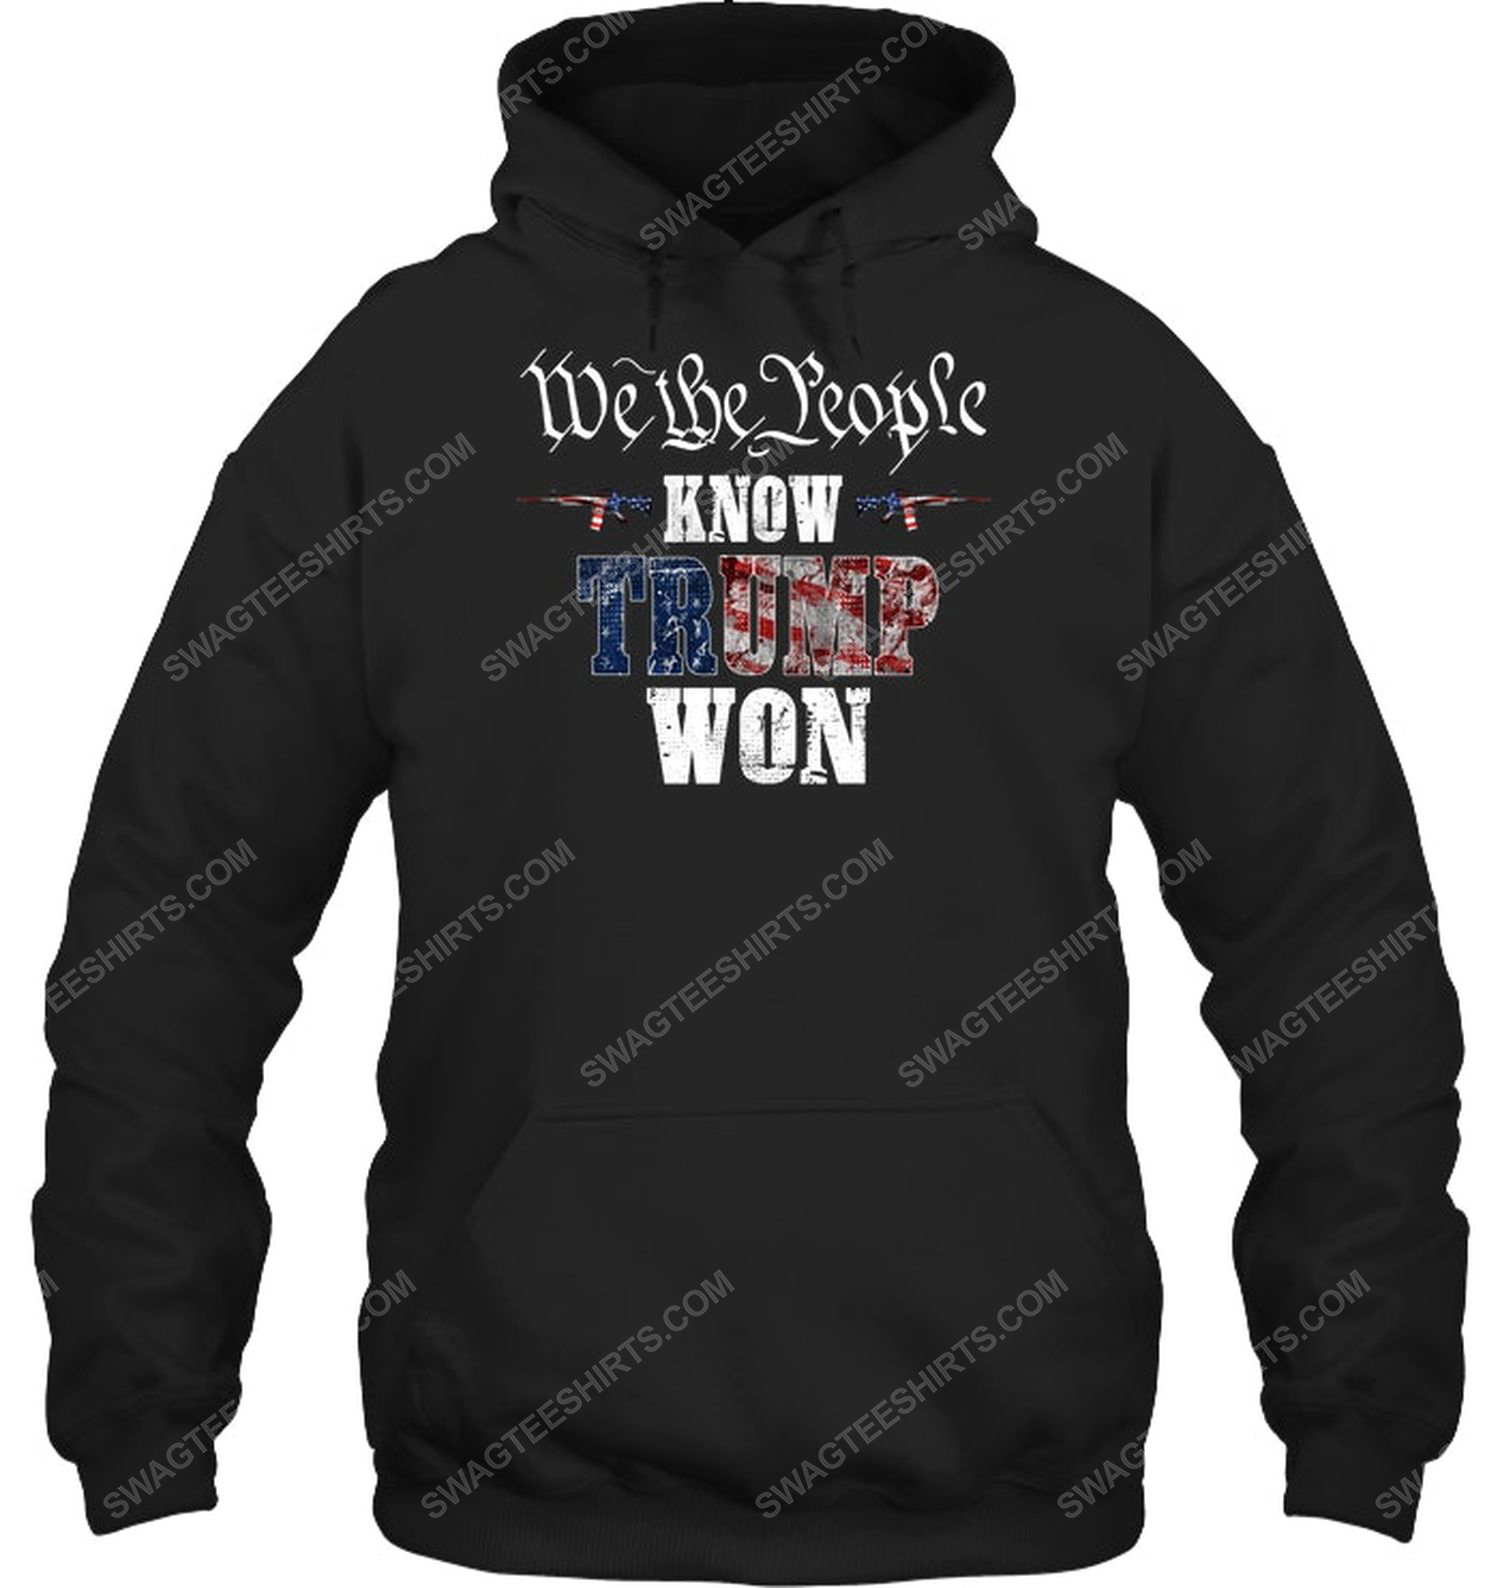 We the people know trump won political hoodie